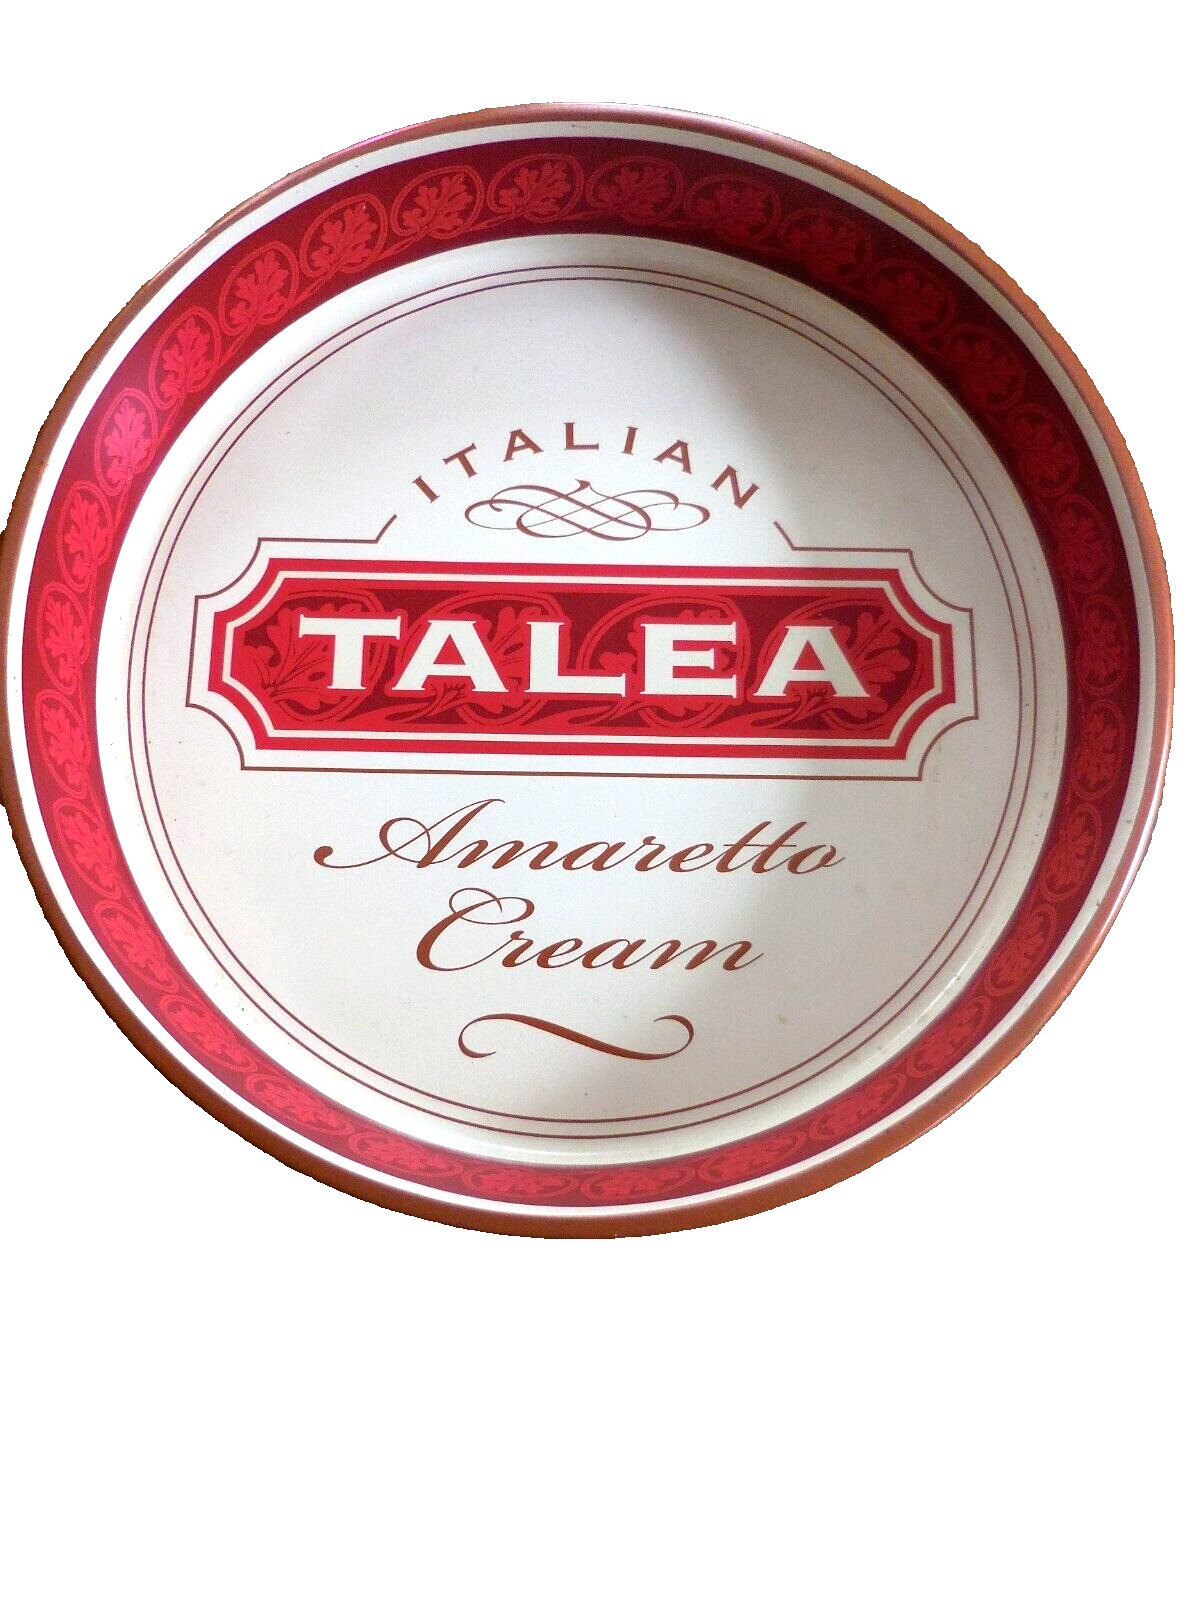 Talea Italian Amaretto Cream vintage metal Tray